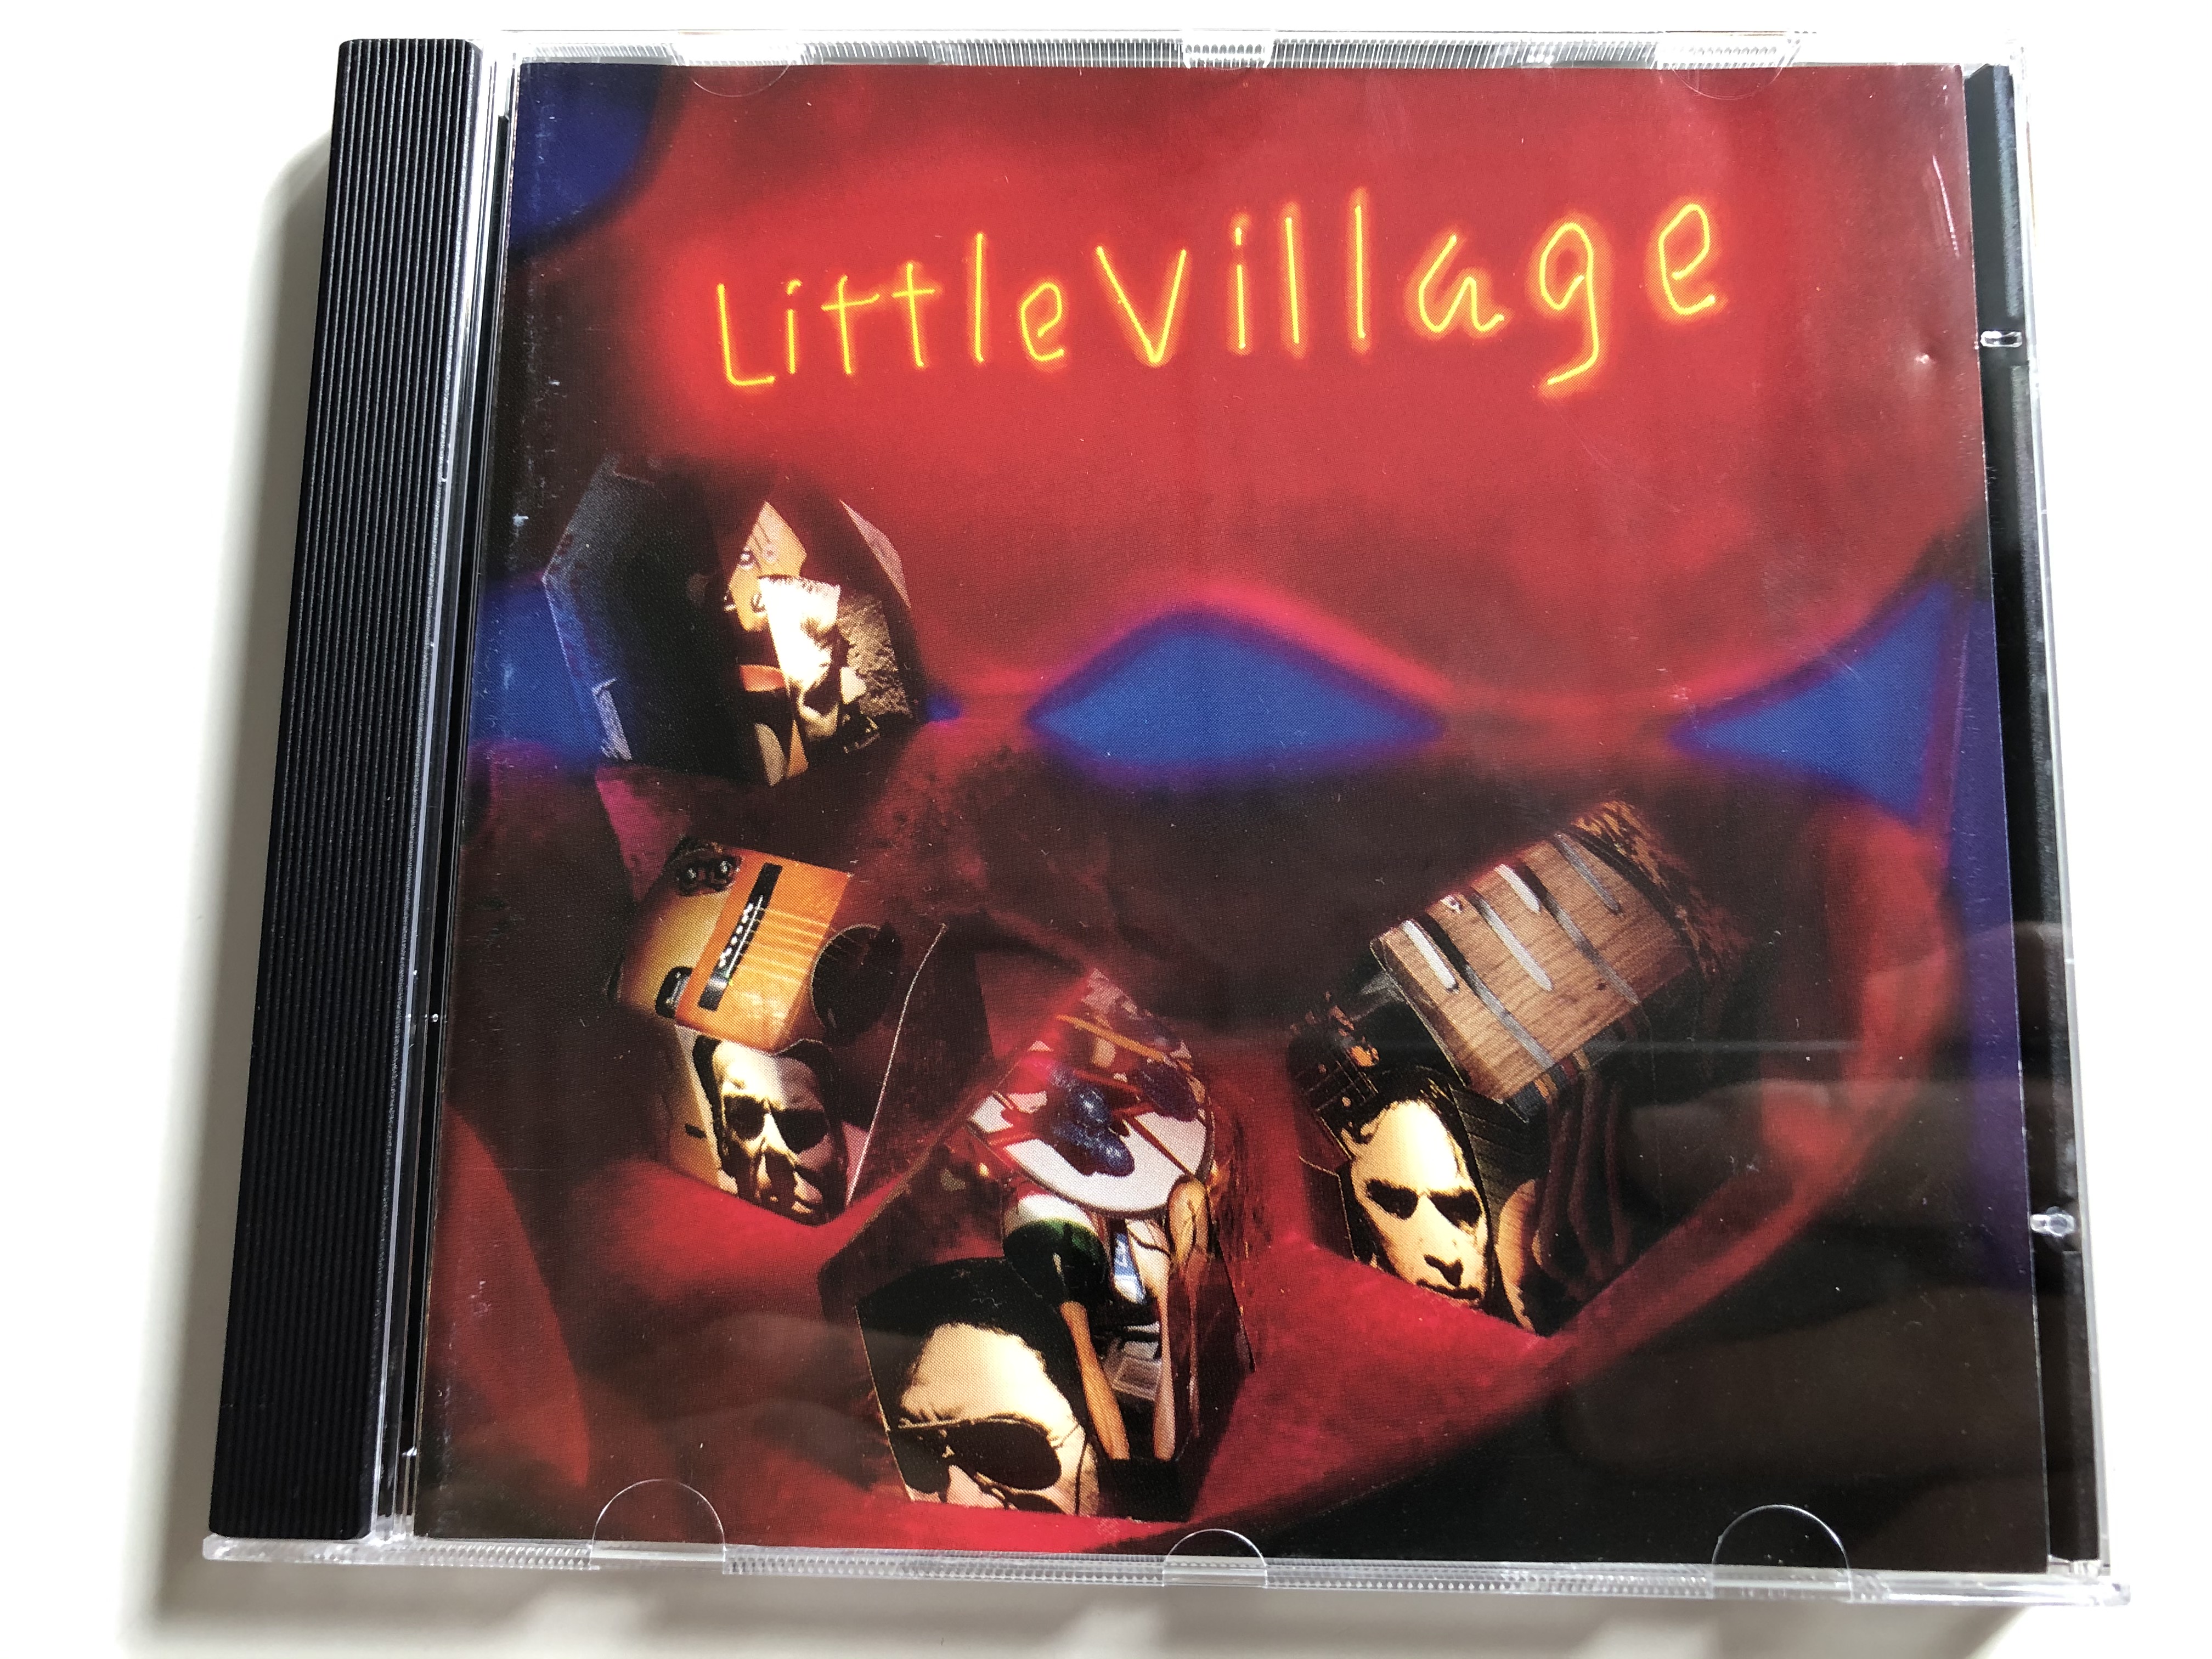 little-village-reprise-records-audio-cd-1992-7599-26713-2-1-.jpg